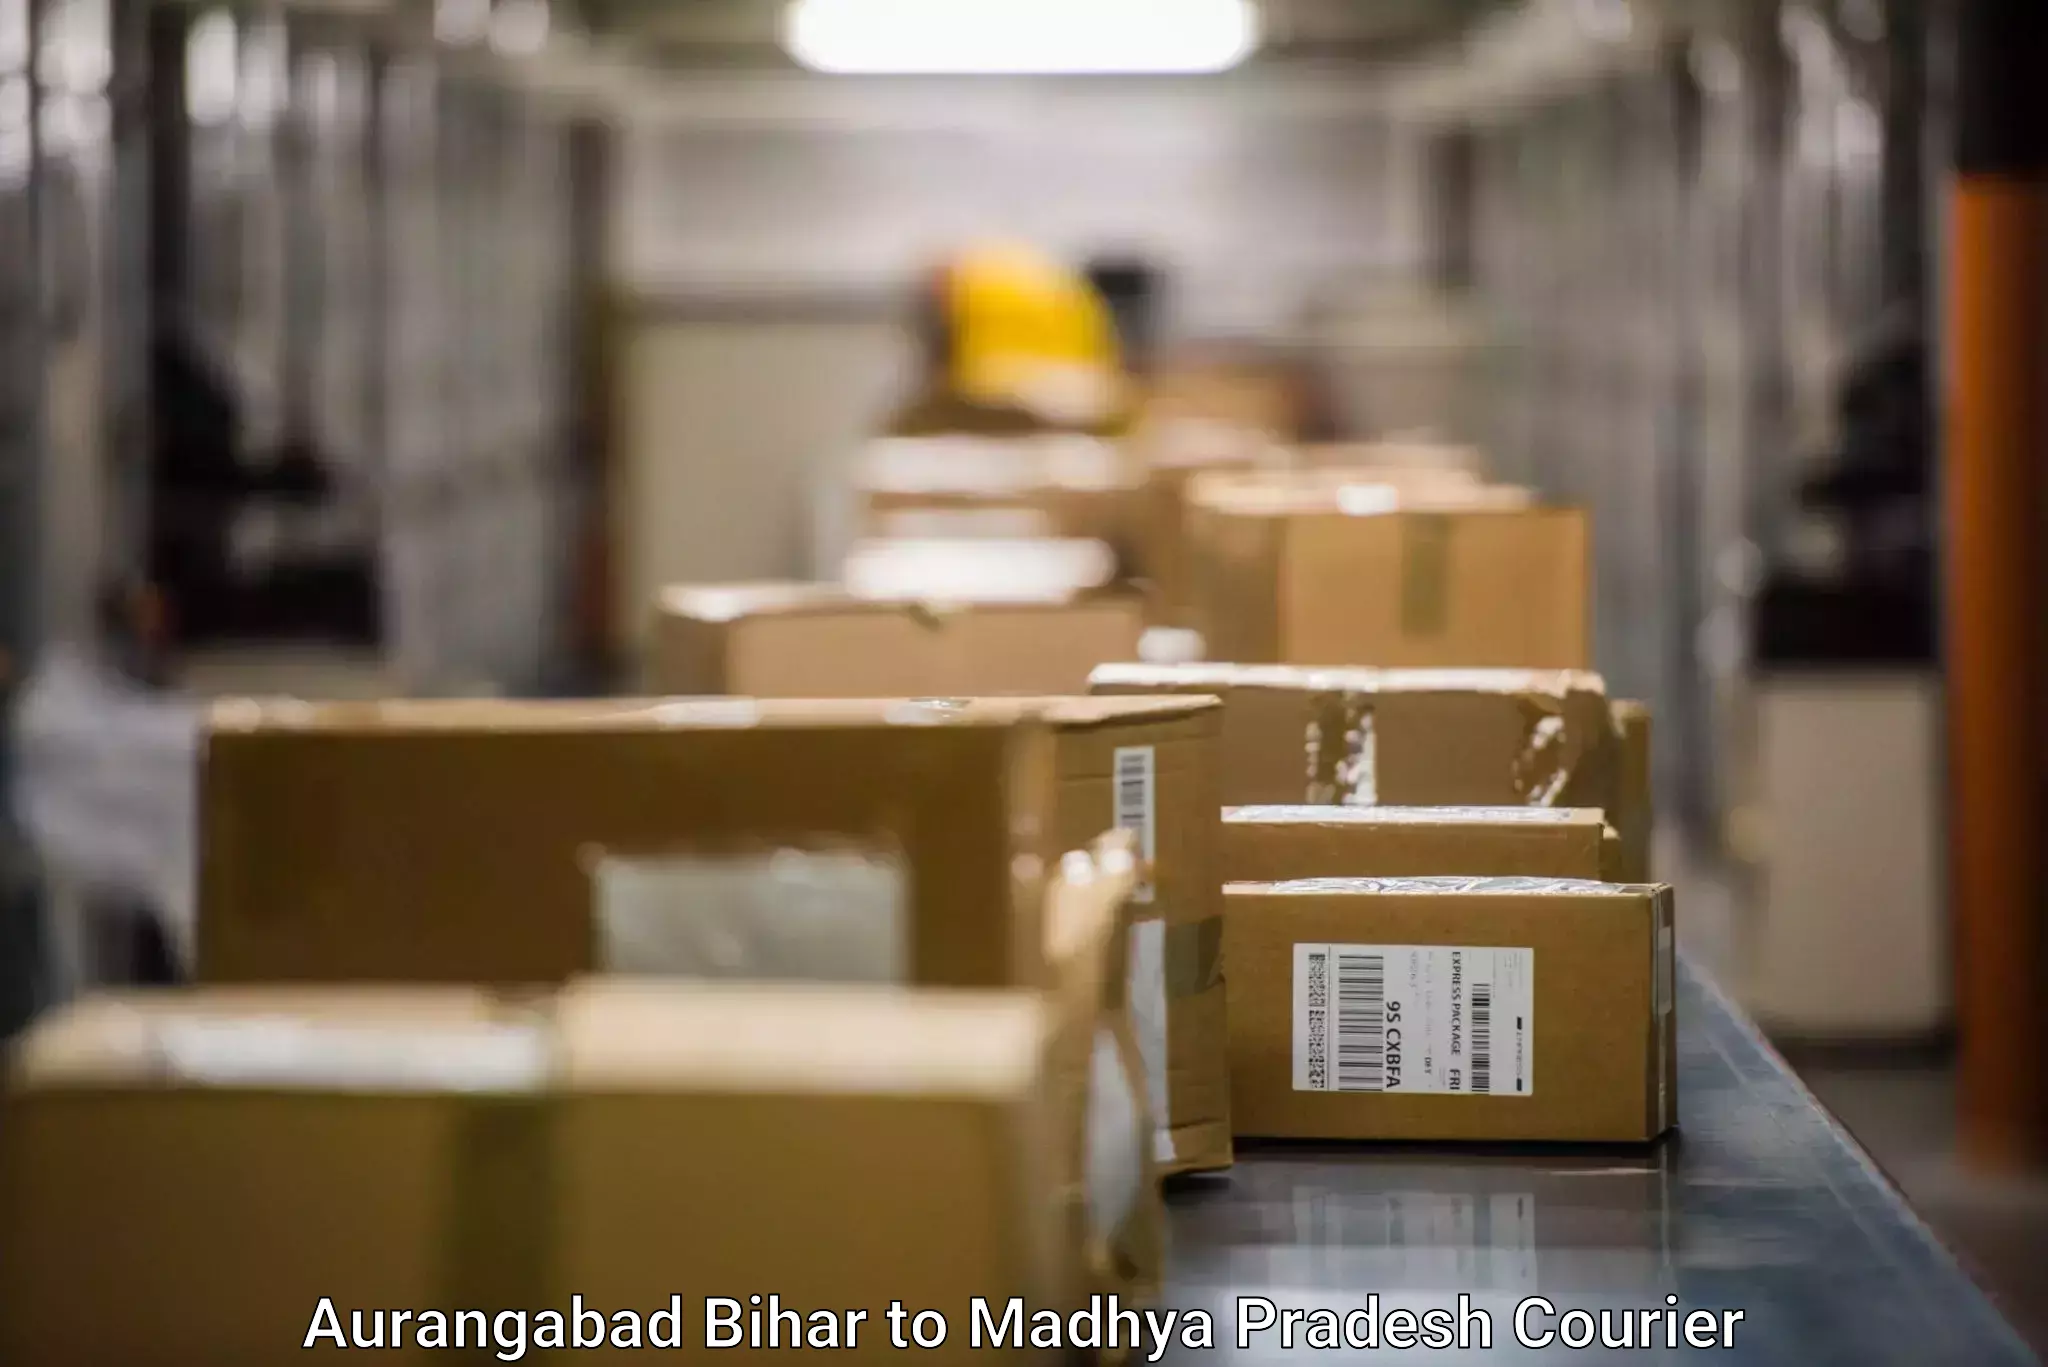 High-capacity parcel service Aurangabad Bihar to Umaria